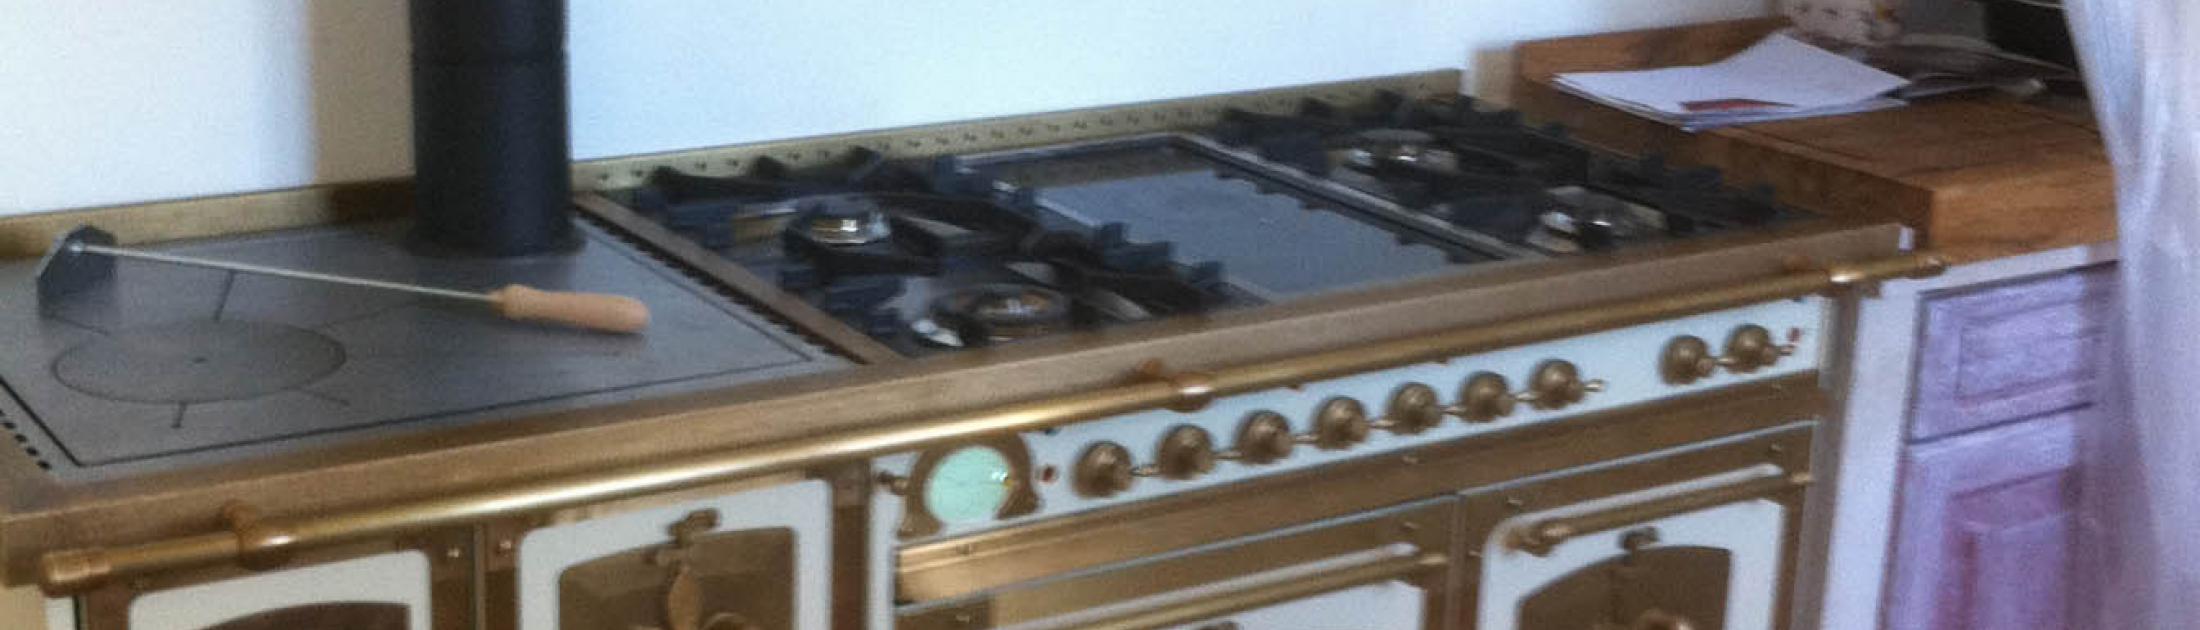 Pose d'un piano de cuisson mixte de la marque RESTART à Auriol par FEU DESIGN